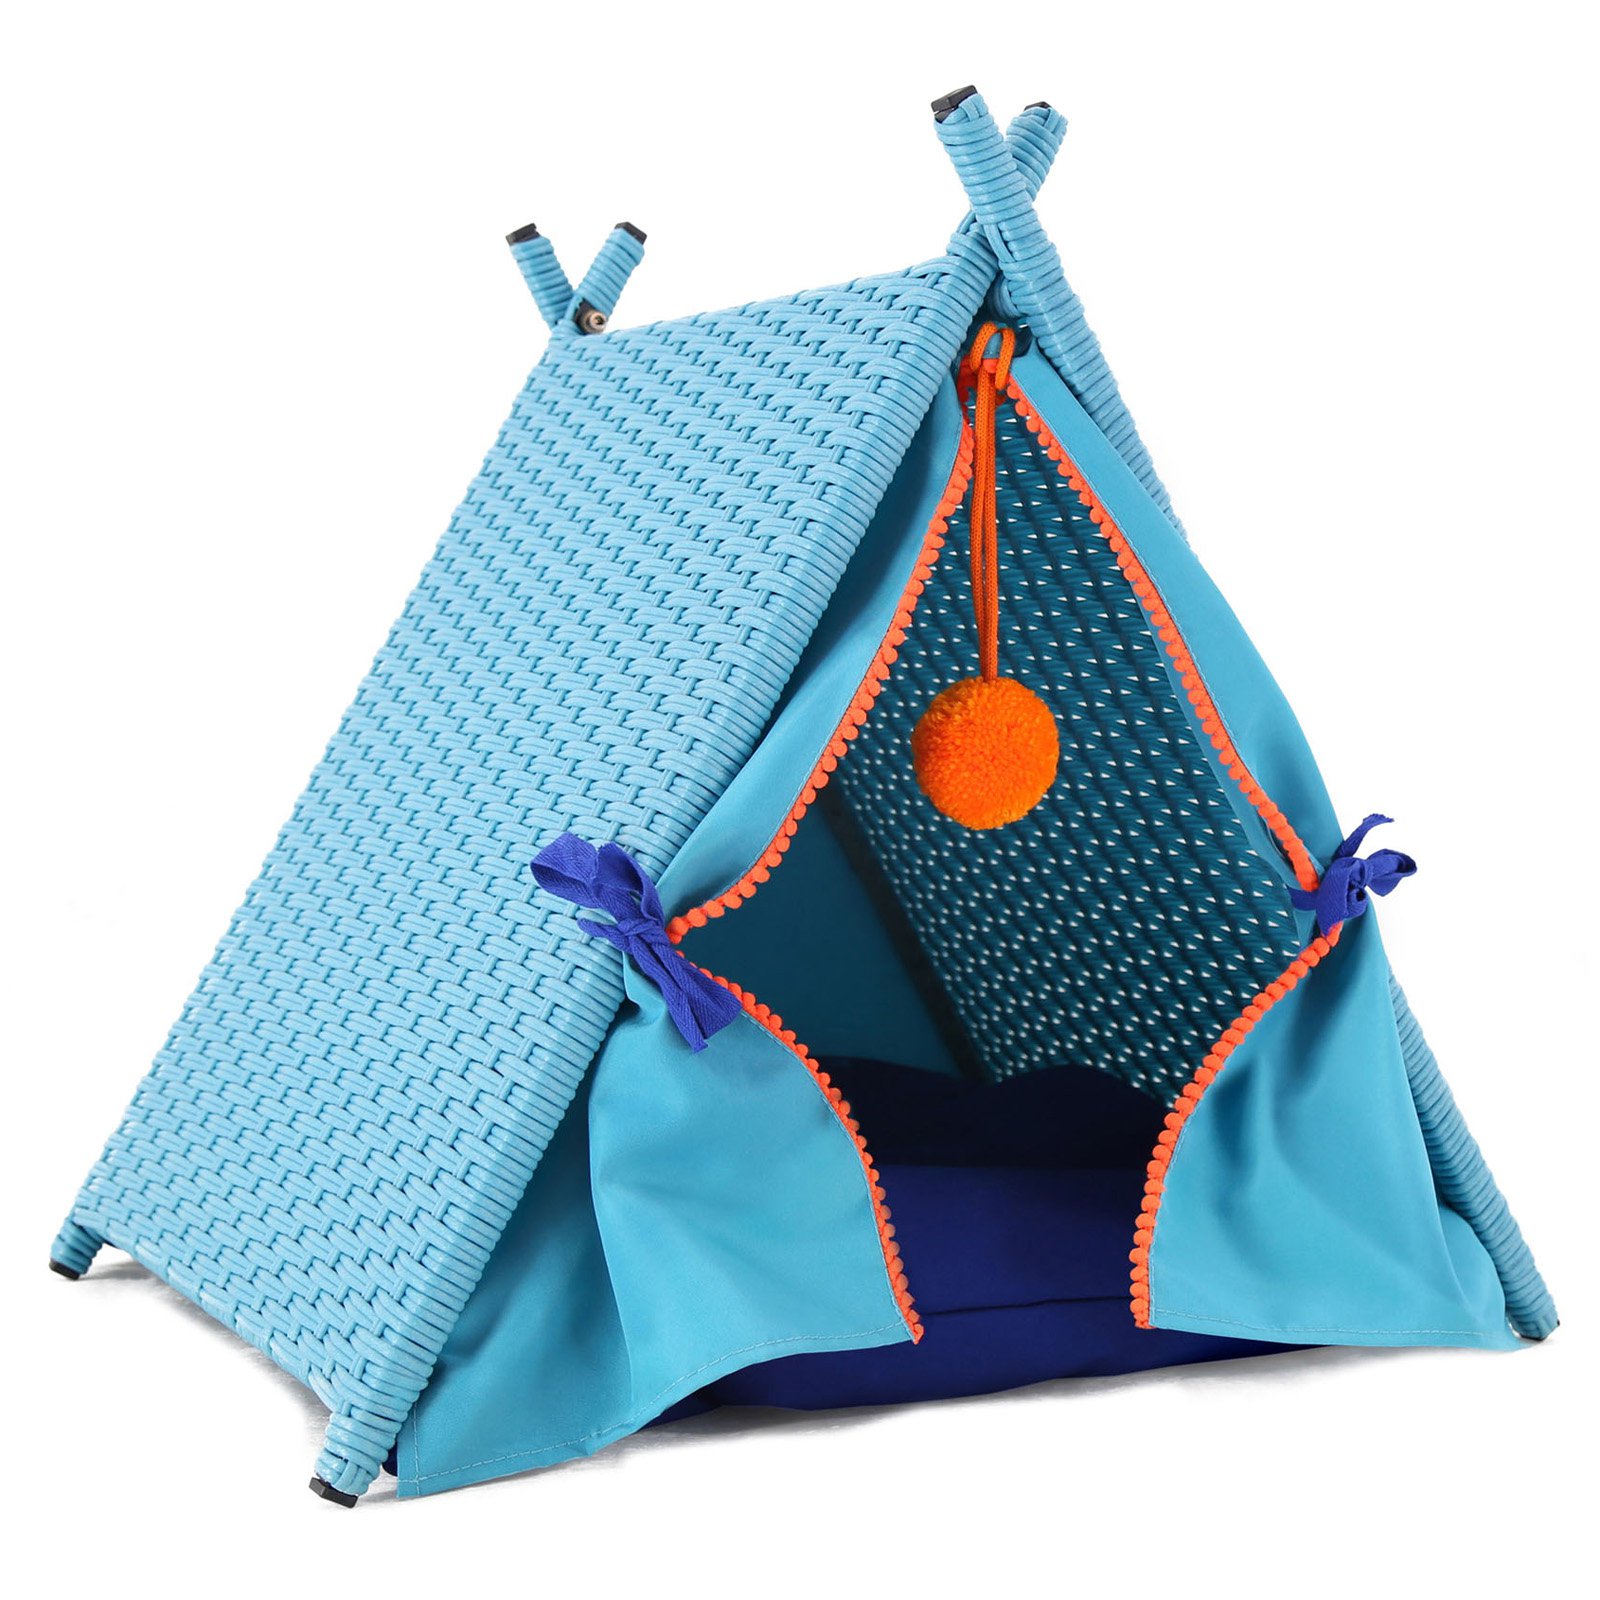 Baner Garden Portable Cat House Tower Tent Playpen - image 1 of 11